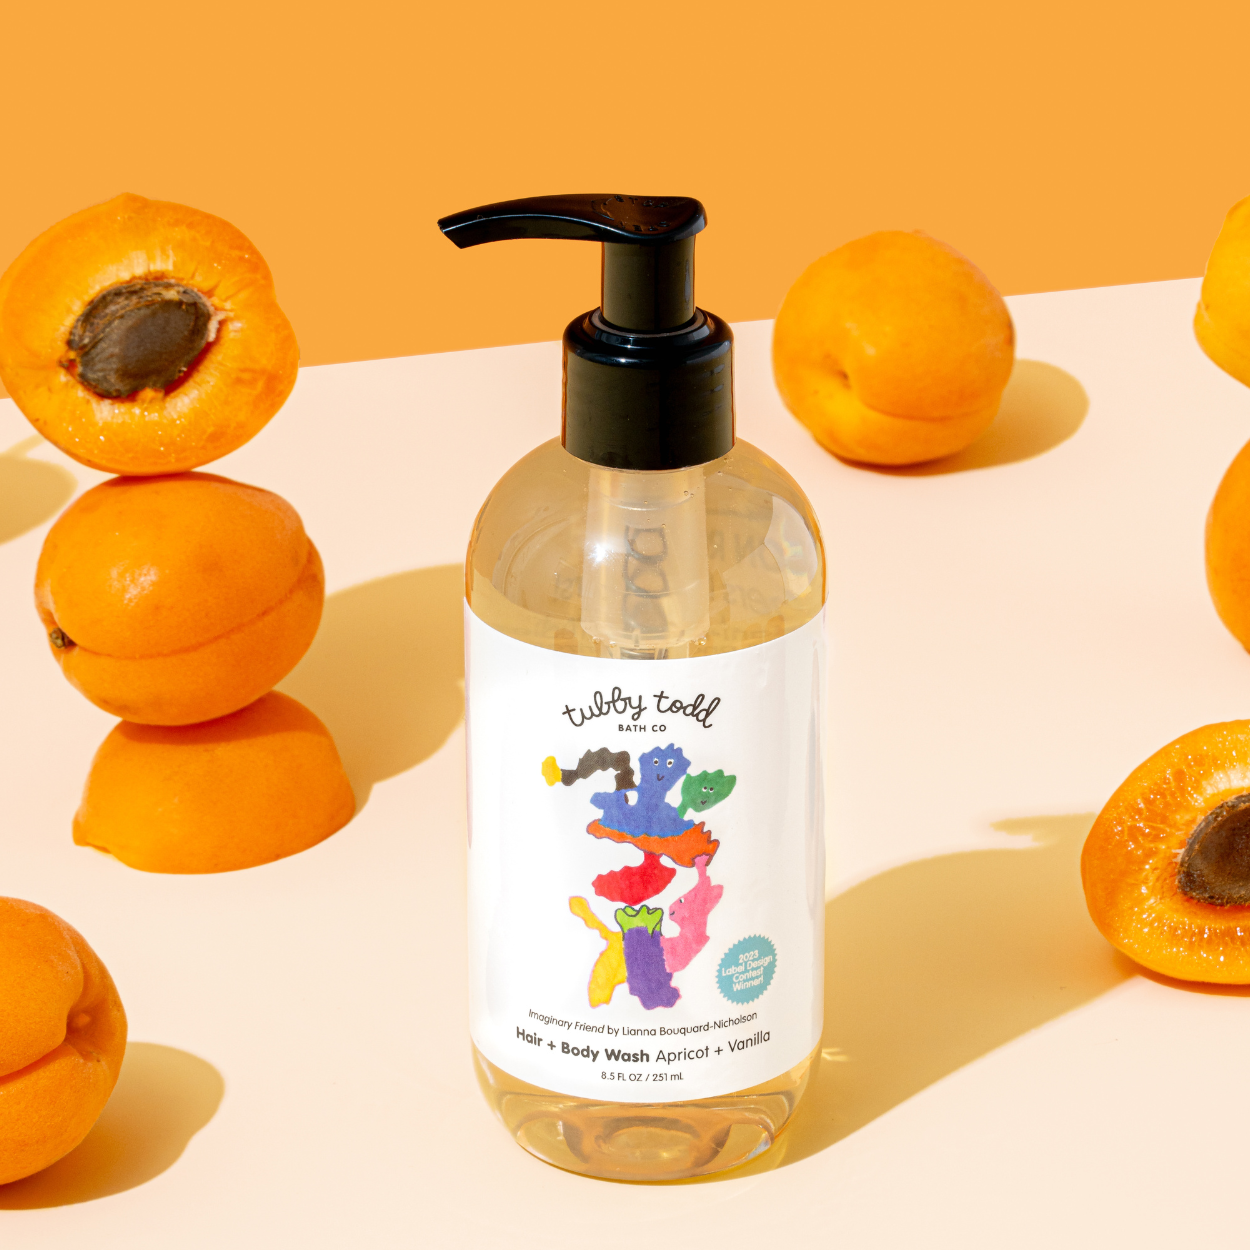 Apricot Hair + Body Wash